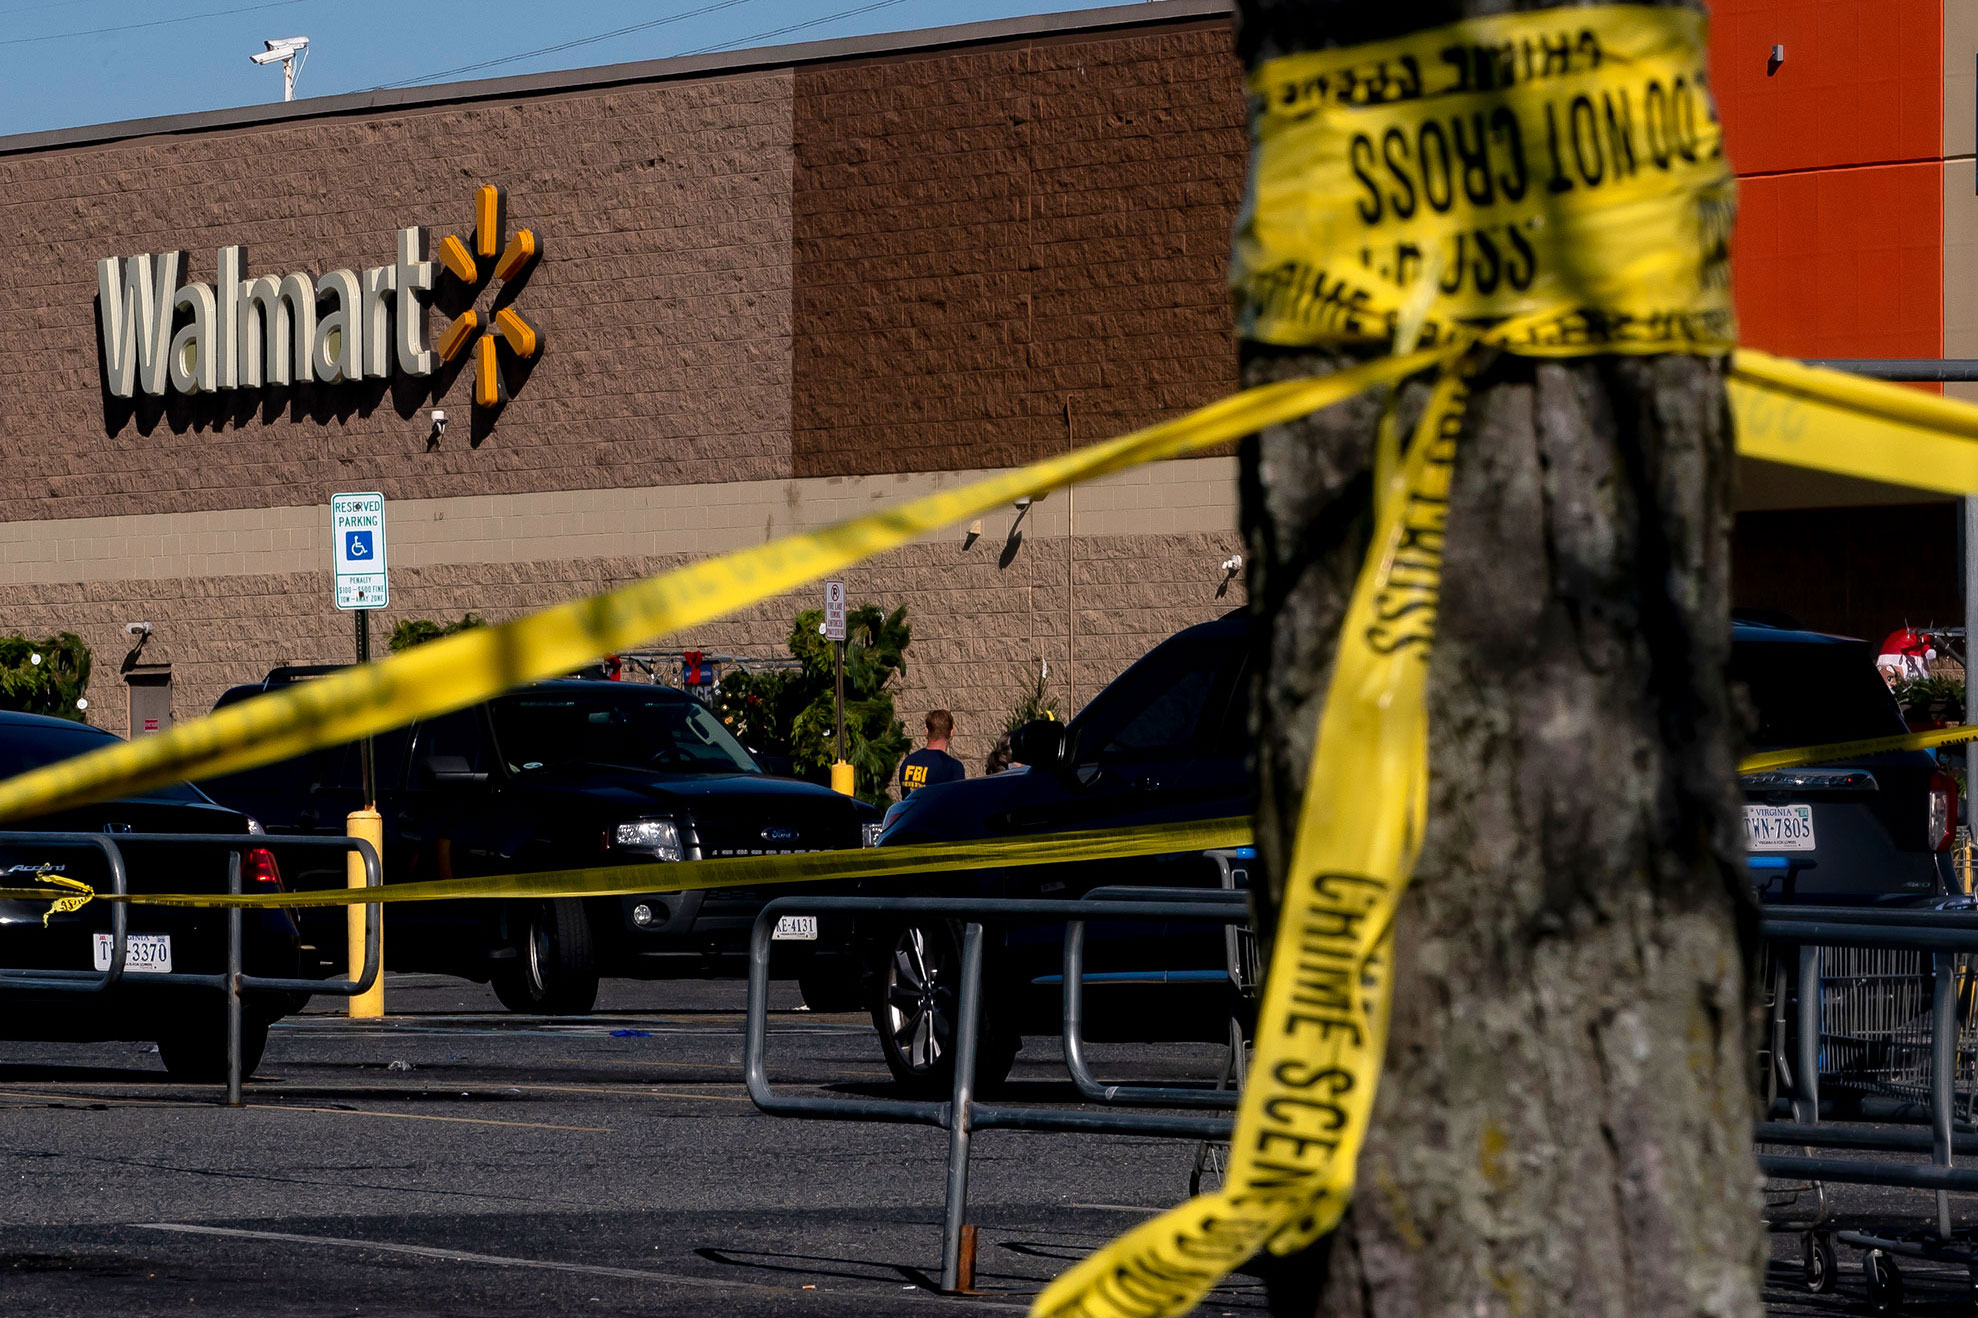 November 23, 2022 Walmart shooting in Chesapeake, Virginia